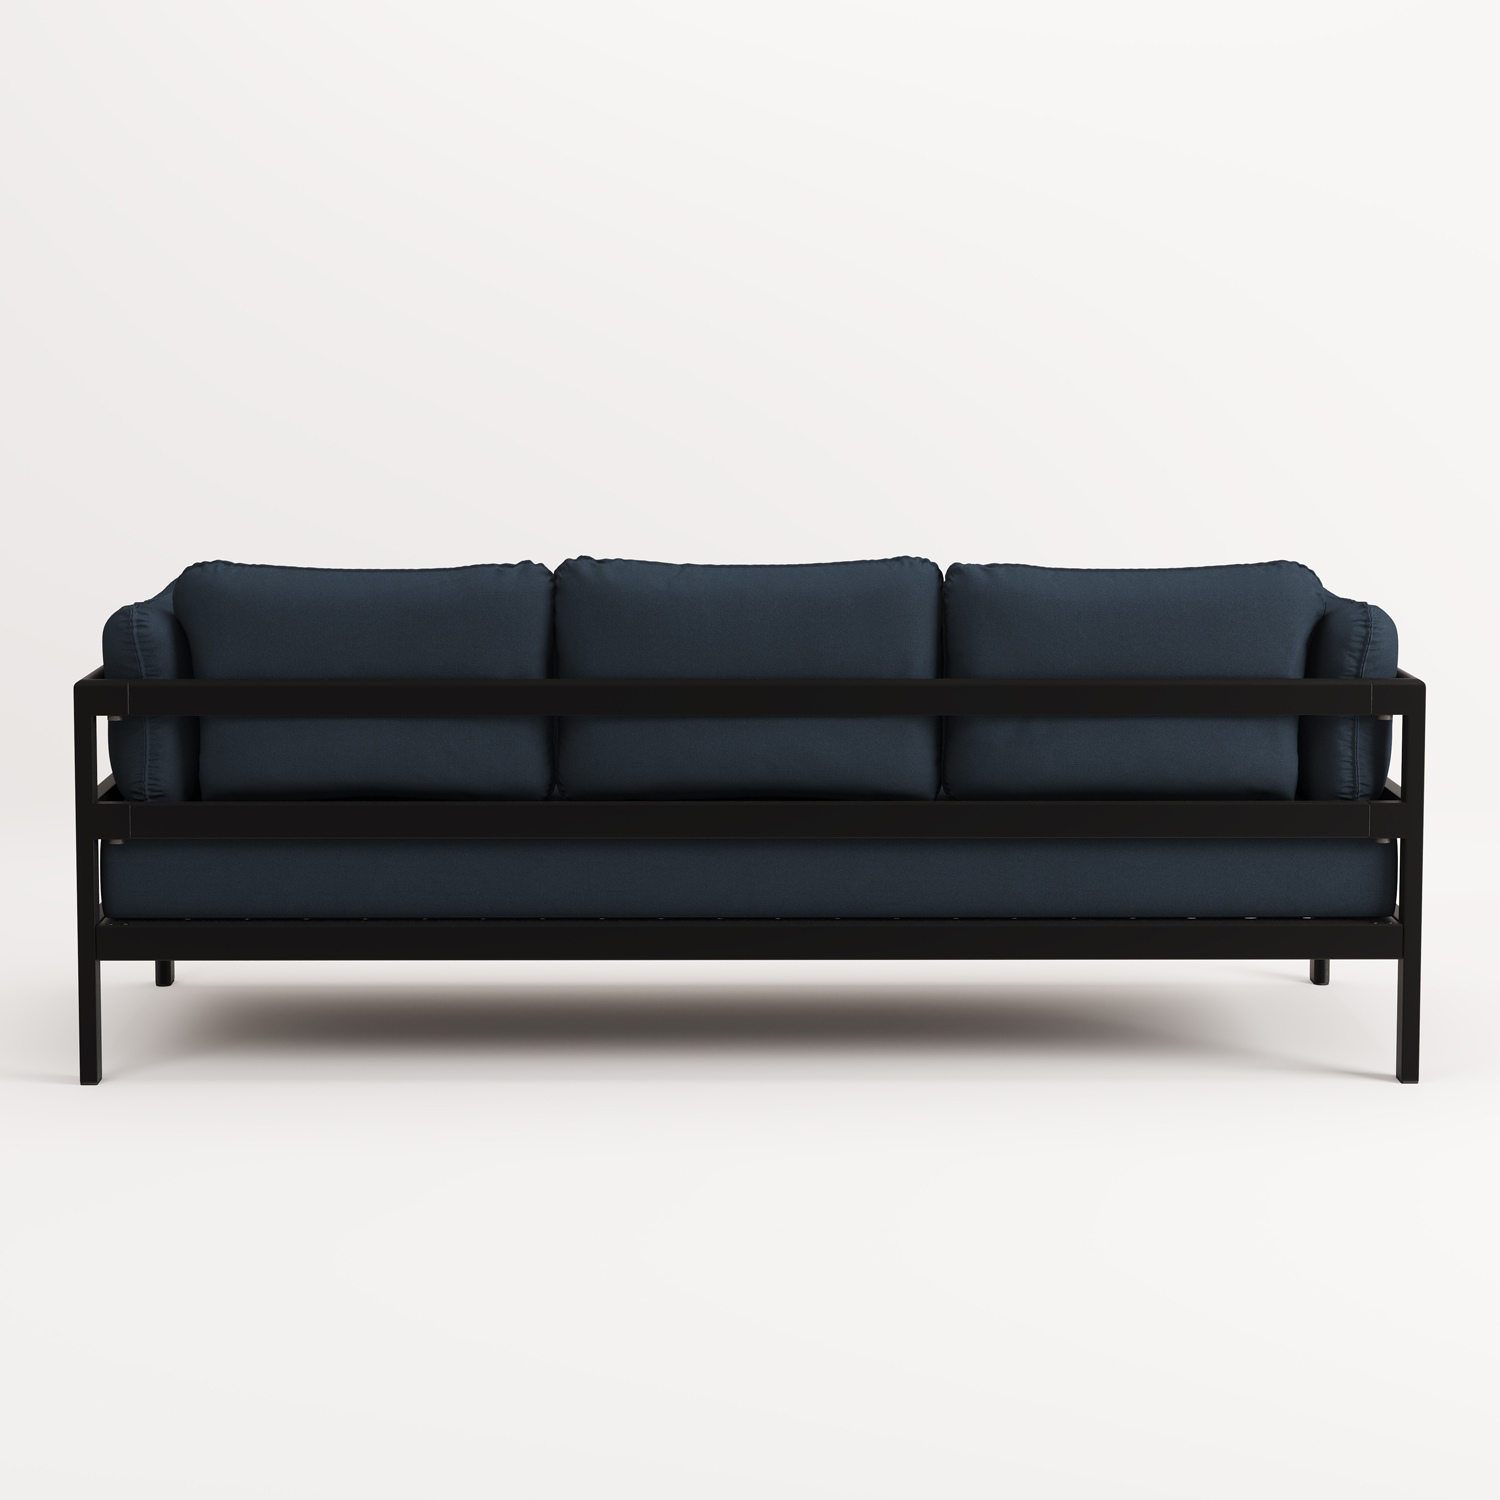 EASY sofa – 3 to 4 seats